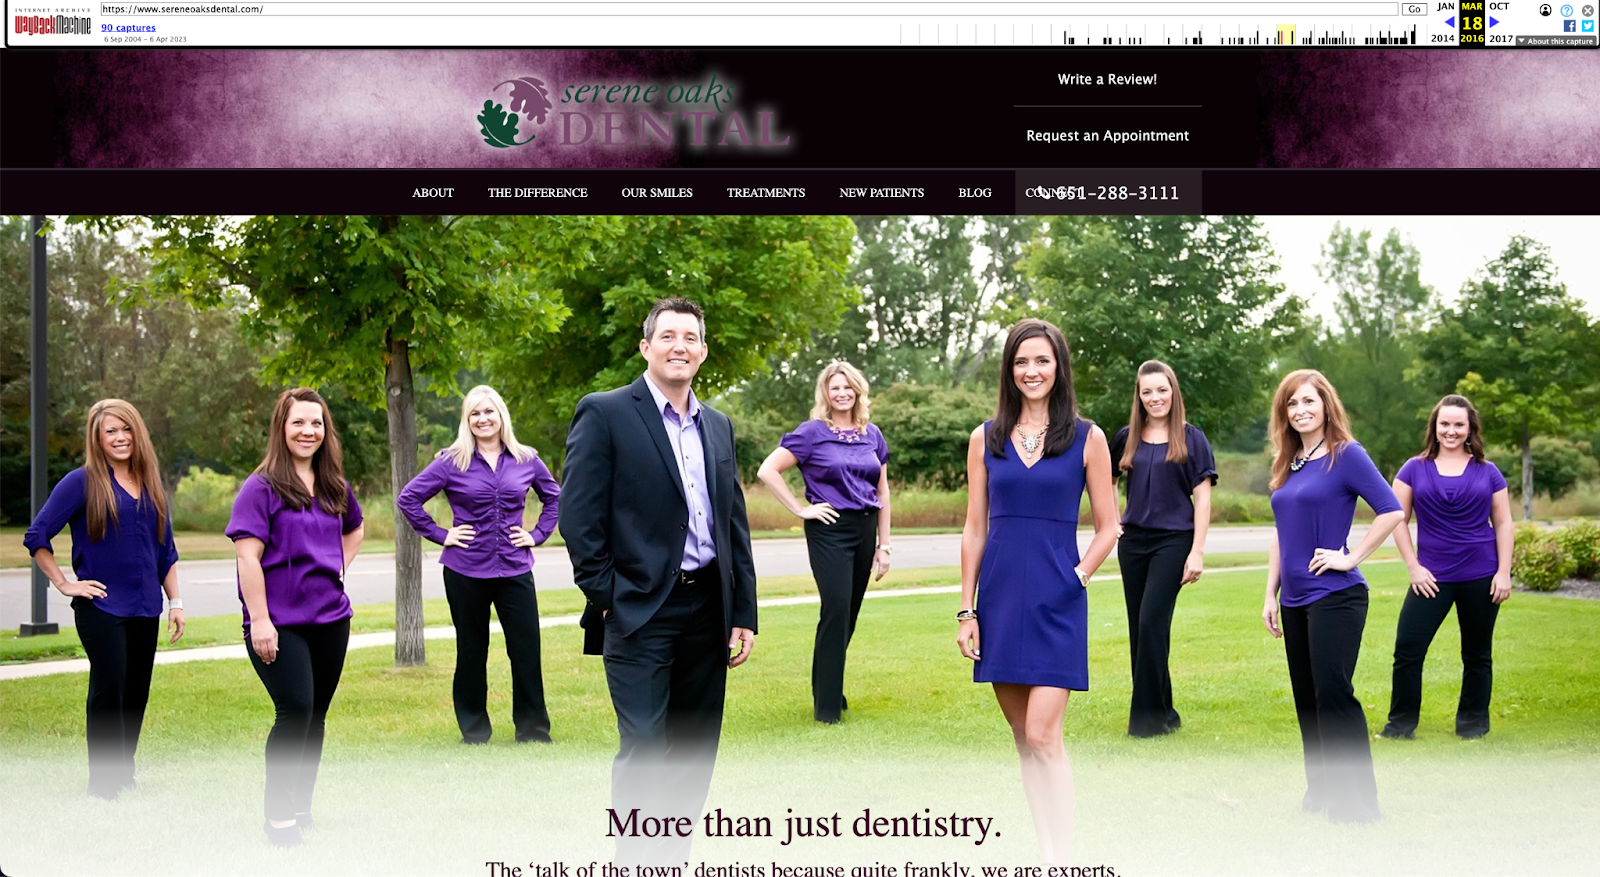 Webarkivresultat av Serene Oaks Dentals hemsida